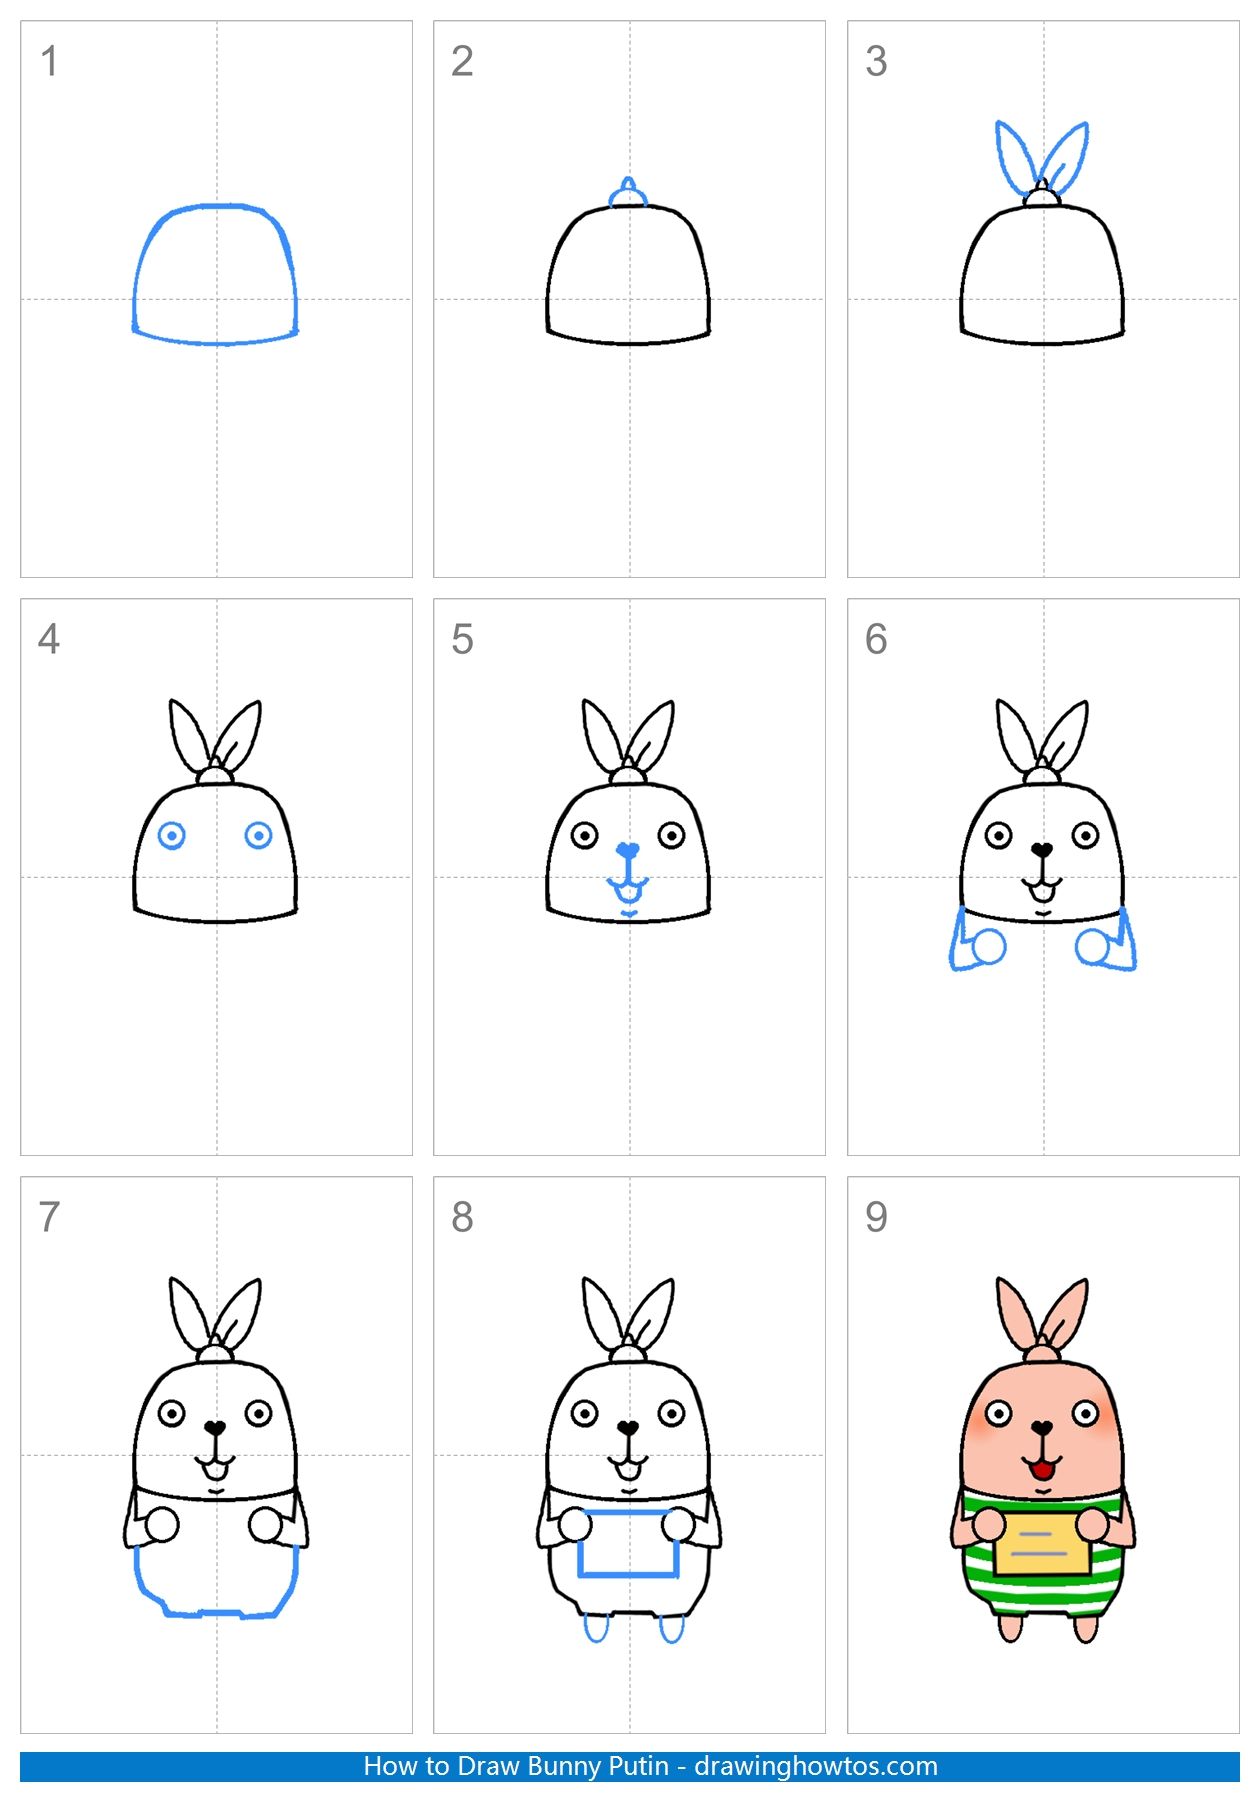 How to Draw Jailbreak Rabbit Putin from Usavich Step by Step